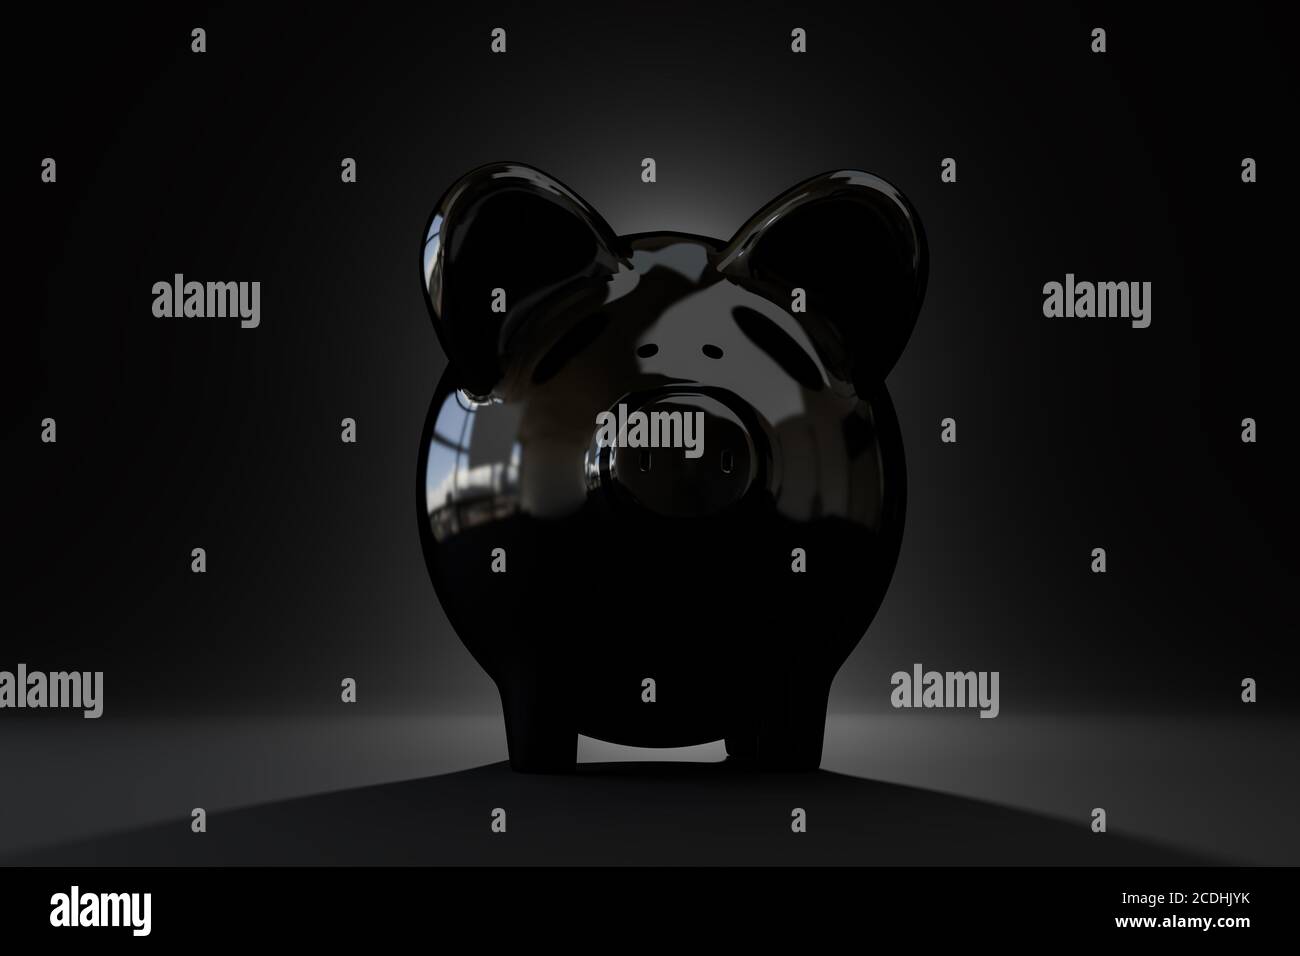 Piggybank savings concept: Low key image of a black piggybank on black background. Lighting from behind. Stock Photo